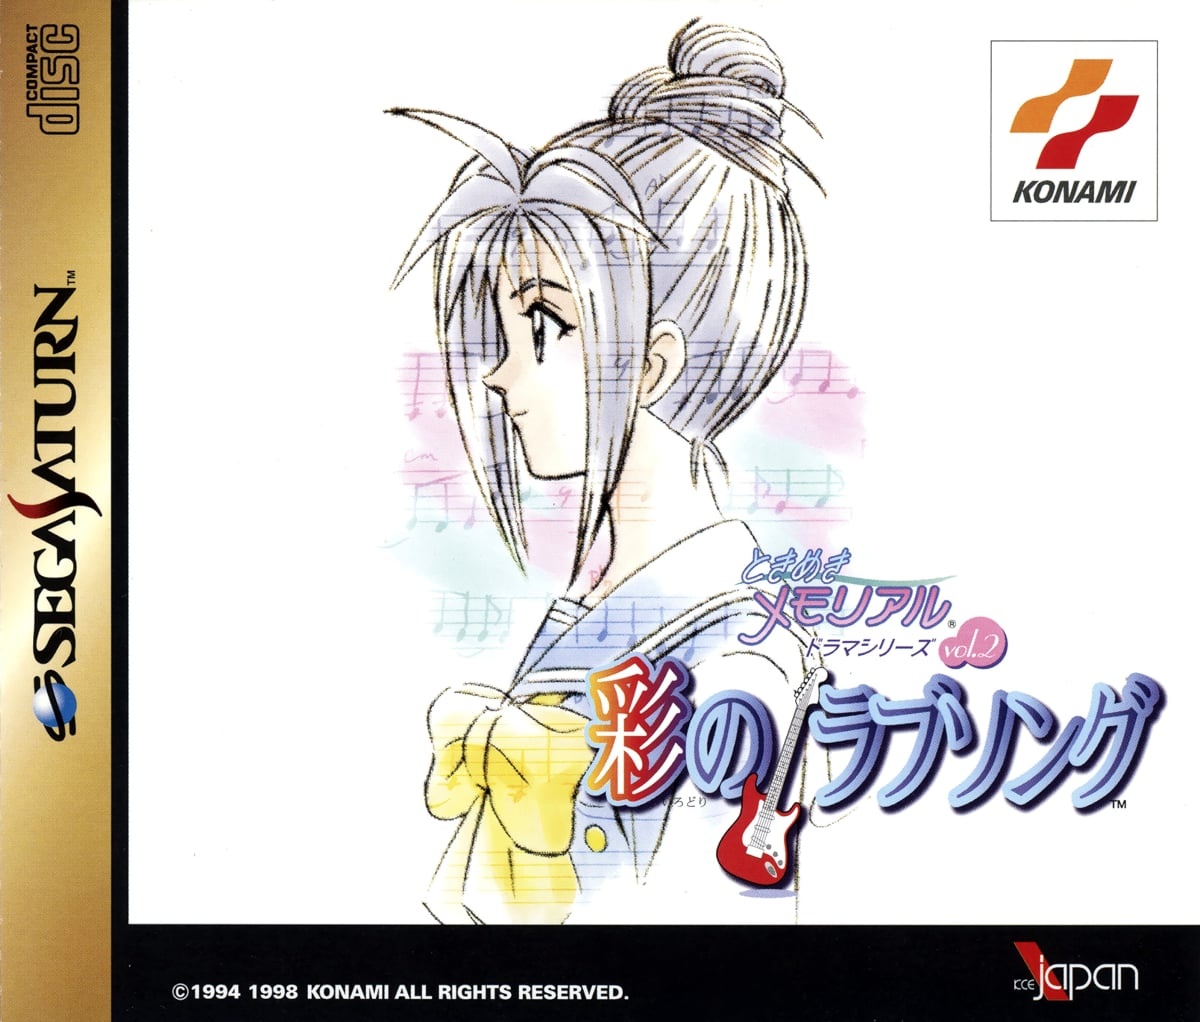 Capa do jogo Tokimeki Memorial Drama Series Vol. 2: Irodori no Lovesong